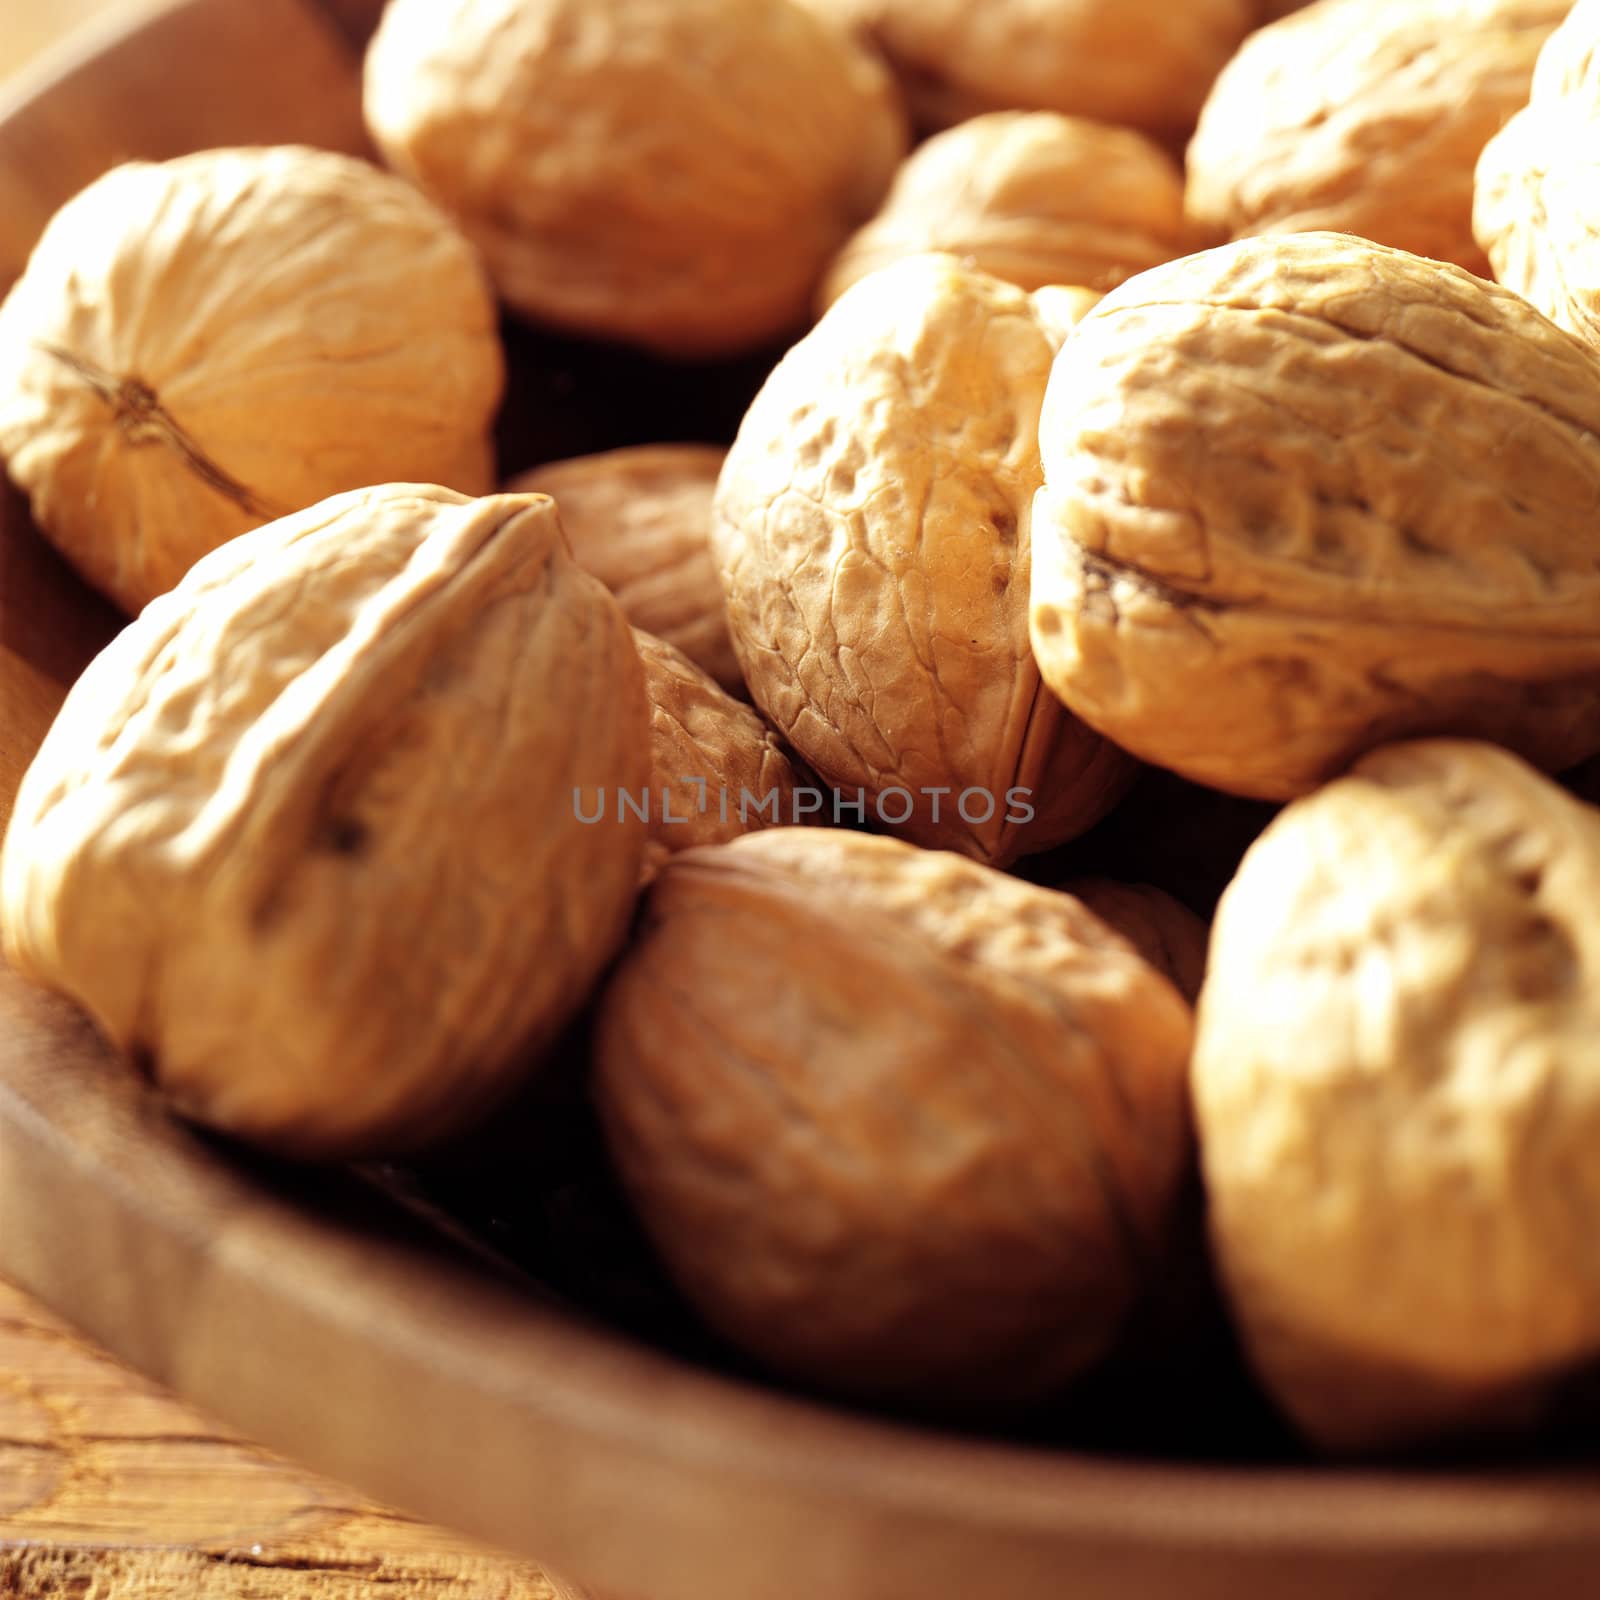 walnuts in sunny lighting